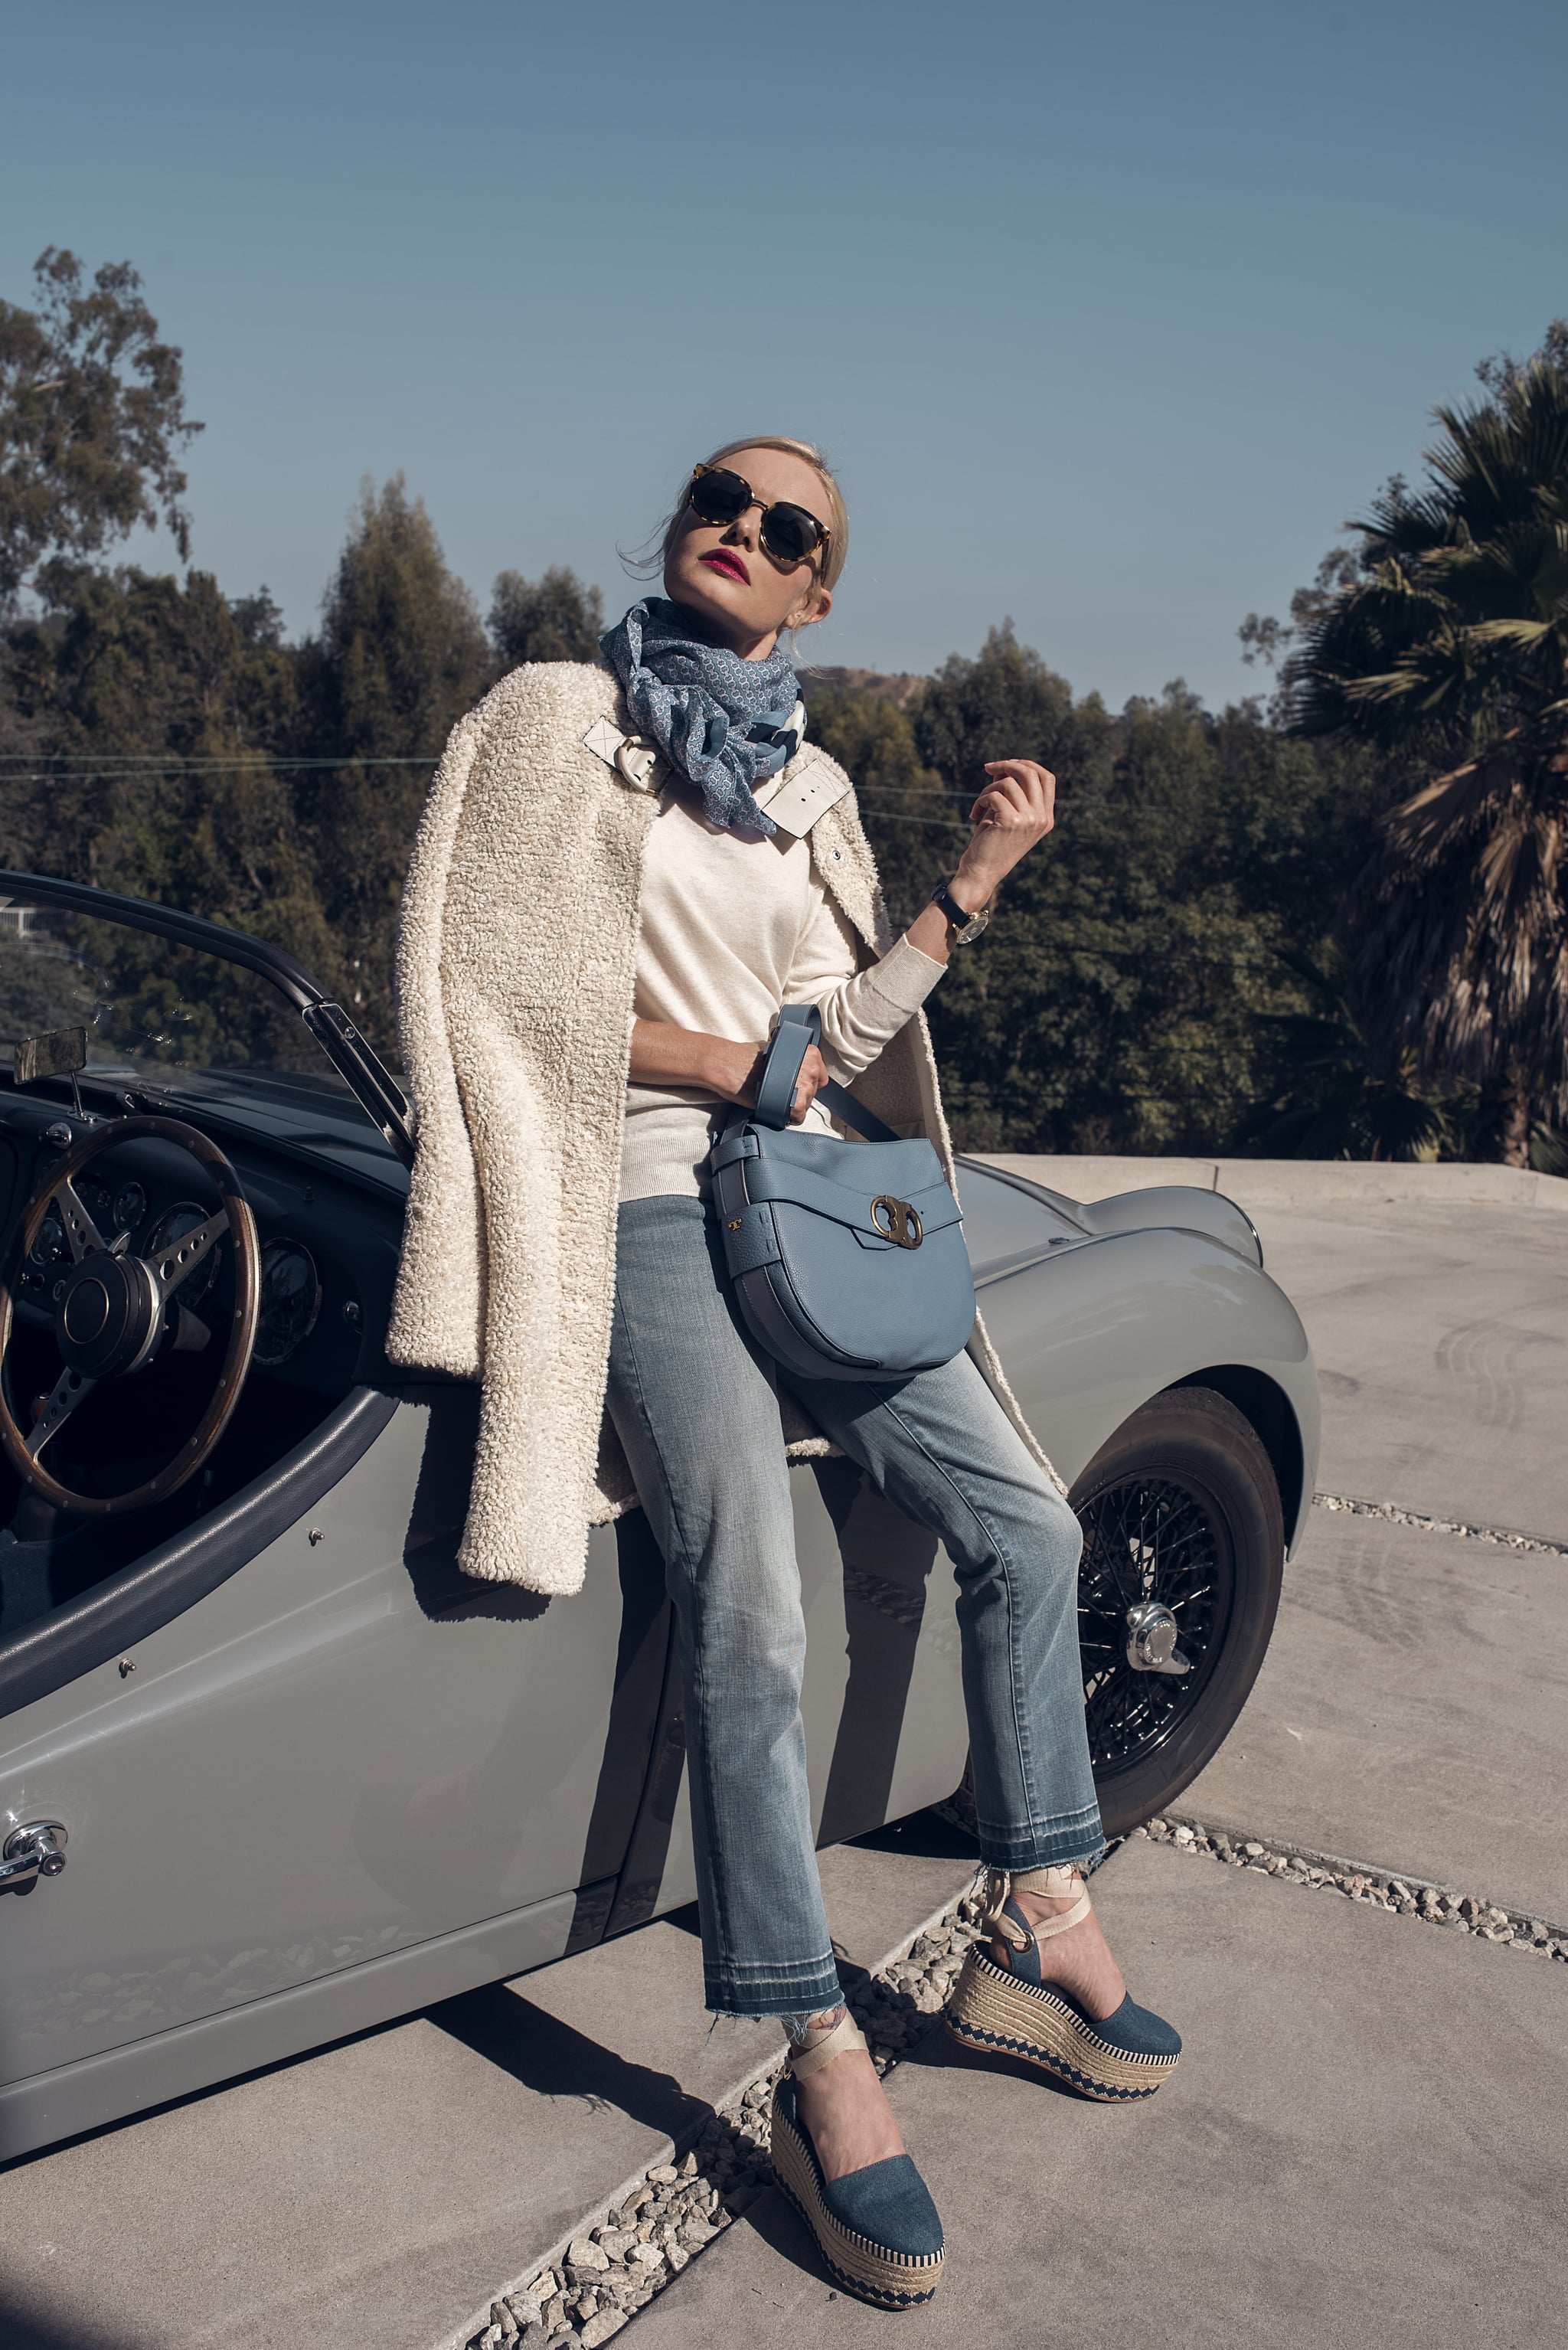 Kate Bosworth x Tory Burch Gemini Link Bag January 2017 | POPSUGAR Fashion